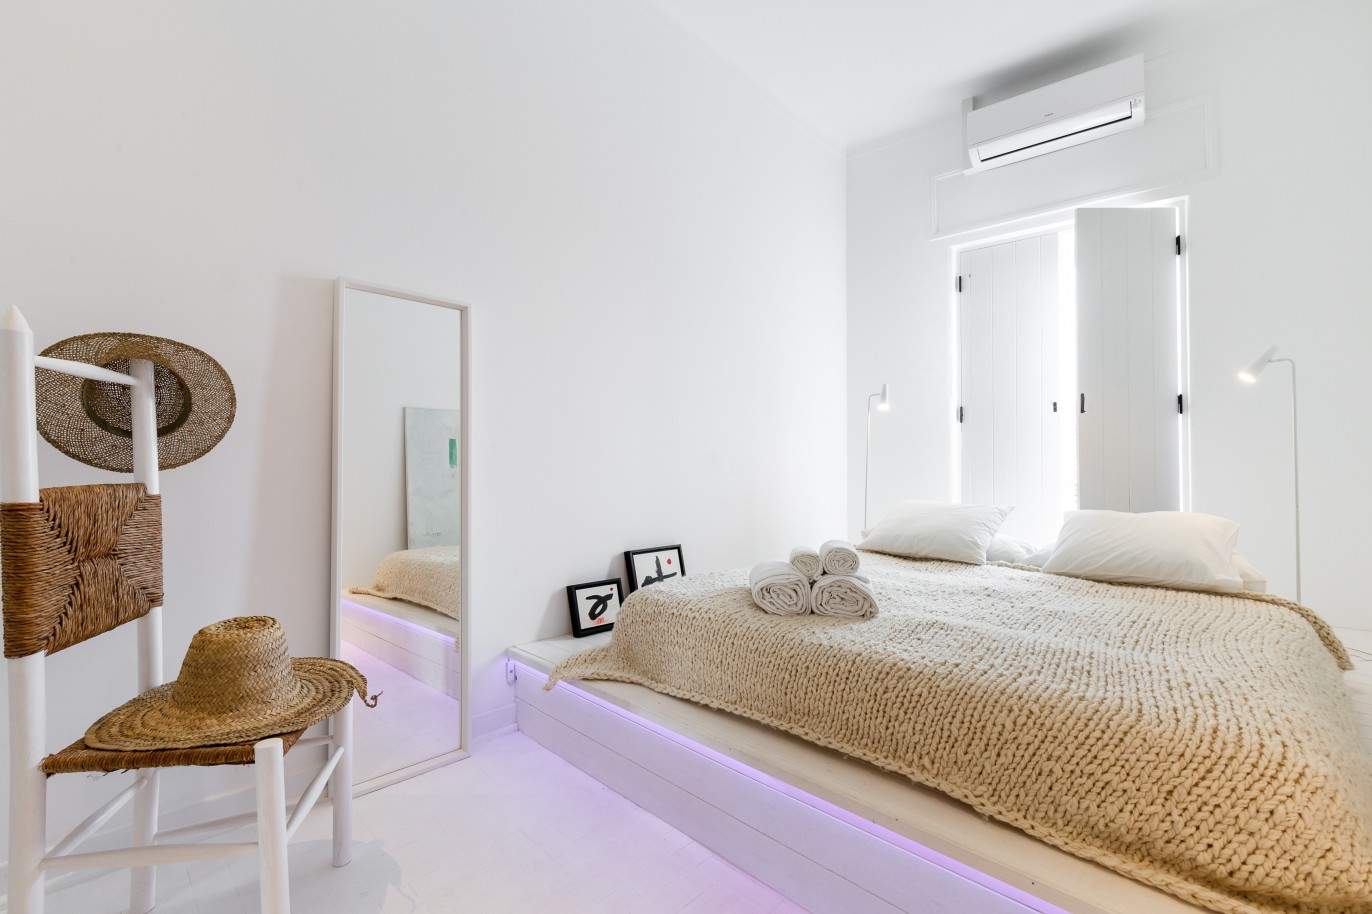 6 Bedrooms luxury villa for sale in Portimão, Algarve_208964